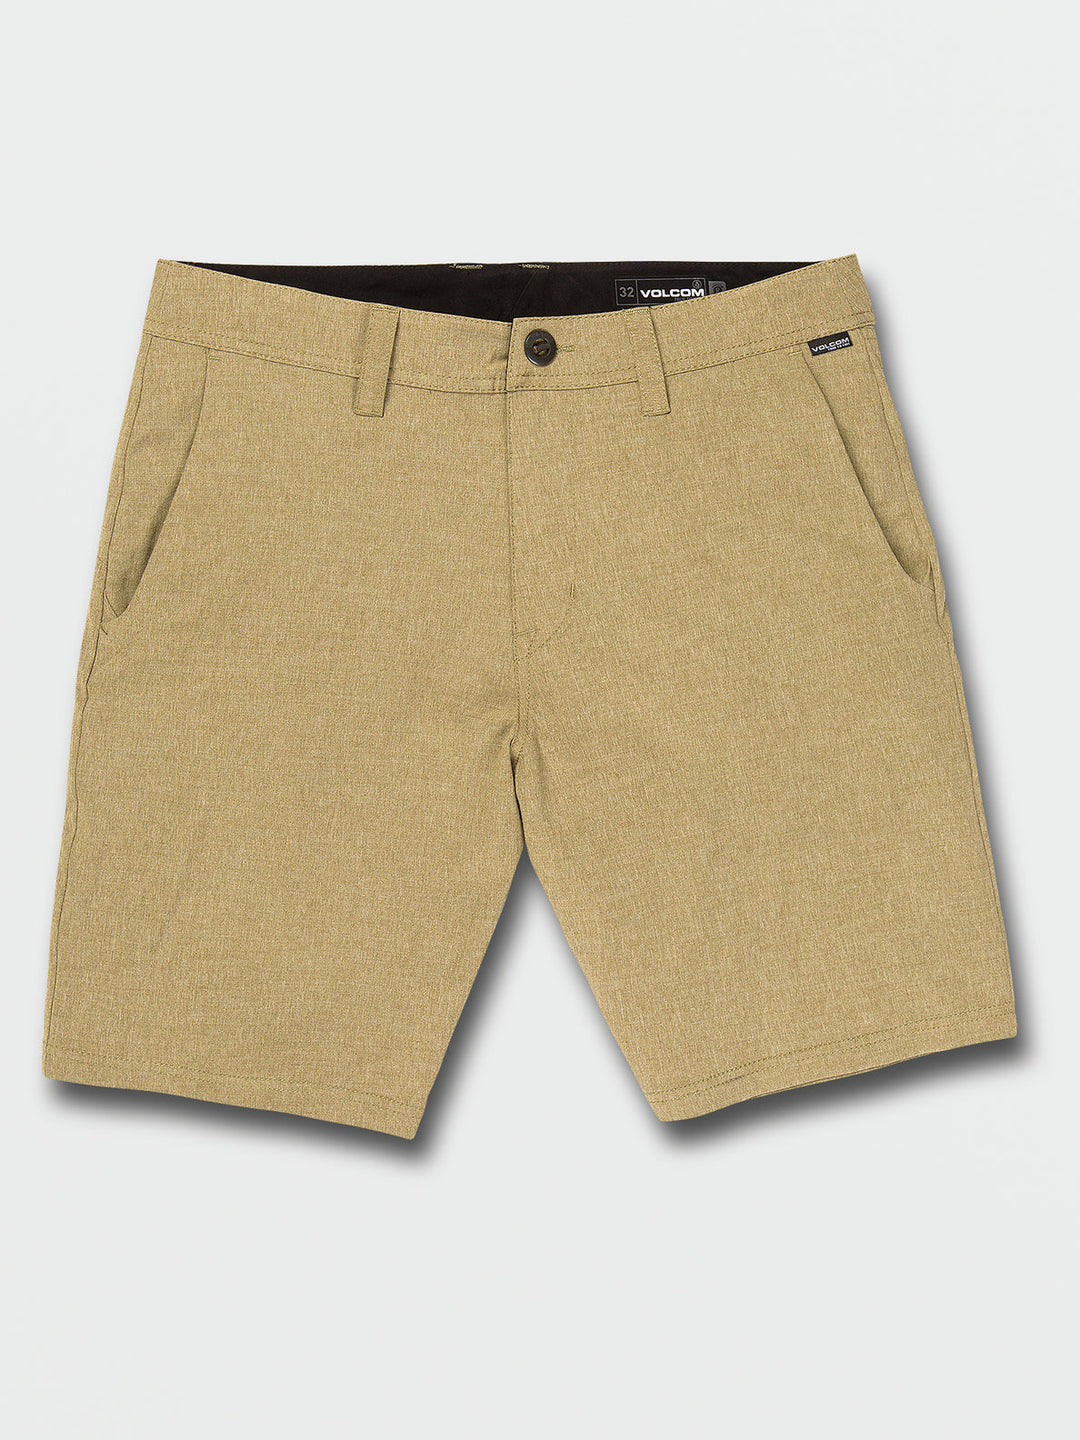 Volcom Frickin Cross Shred Static Shorts - Dark Khaki (Front)